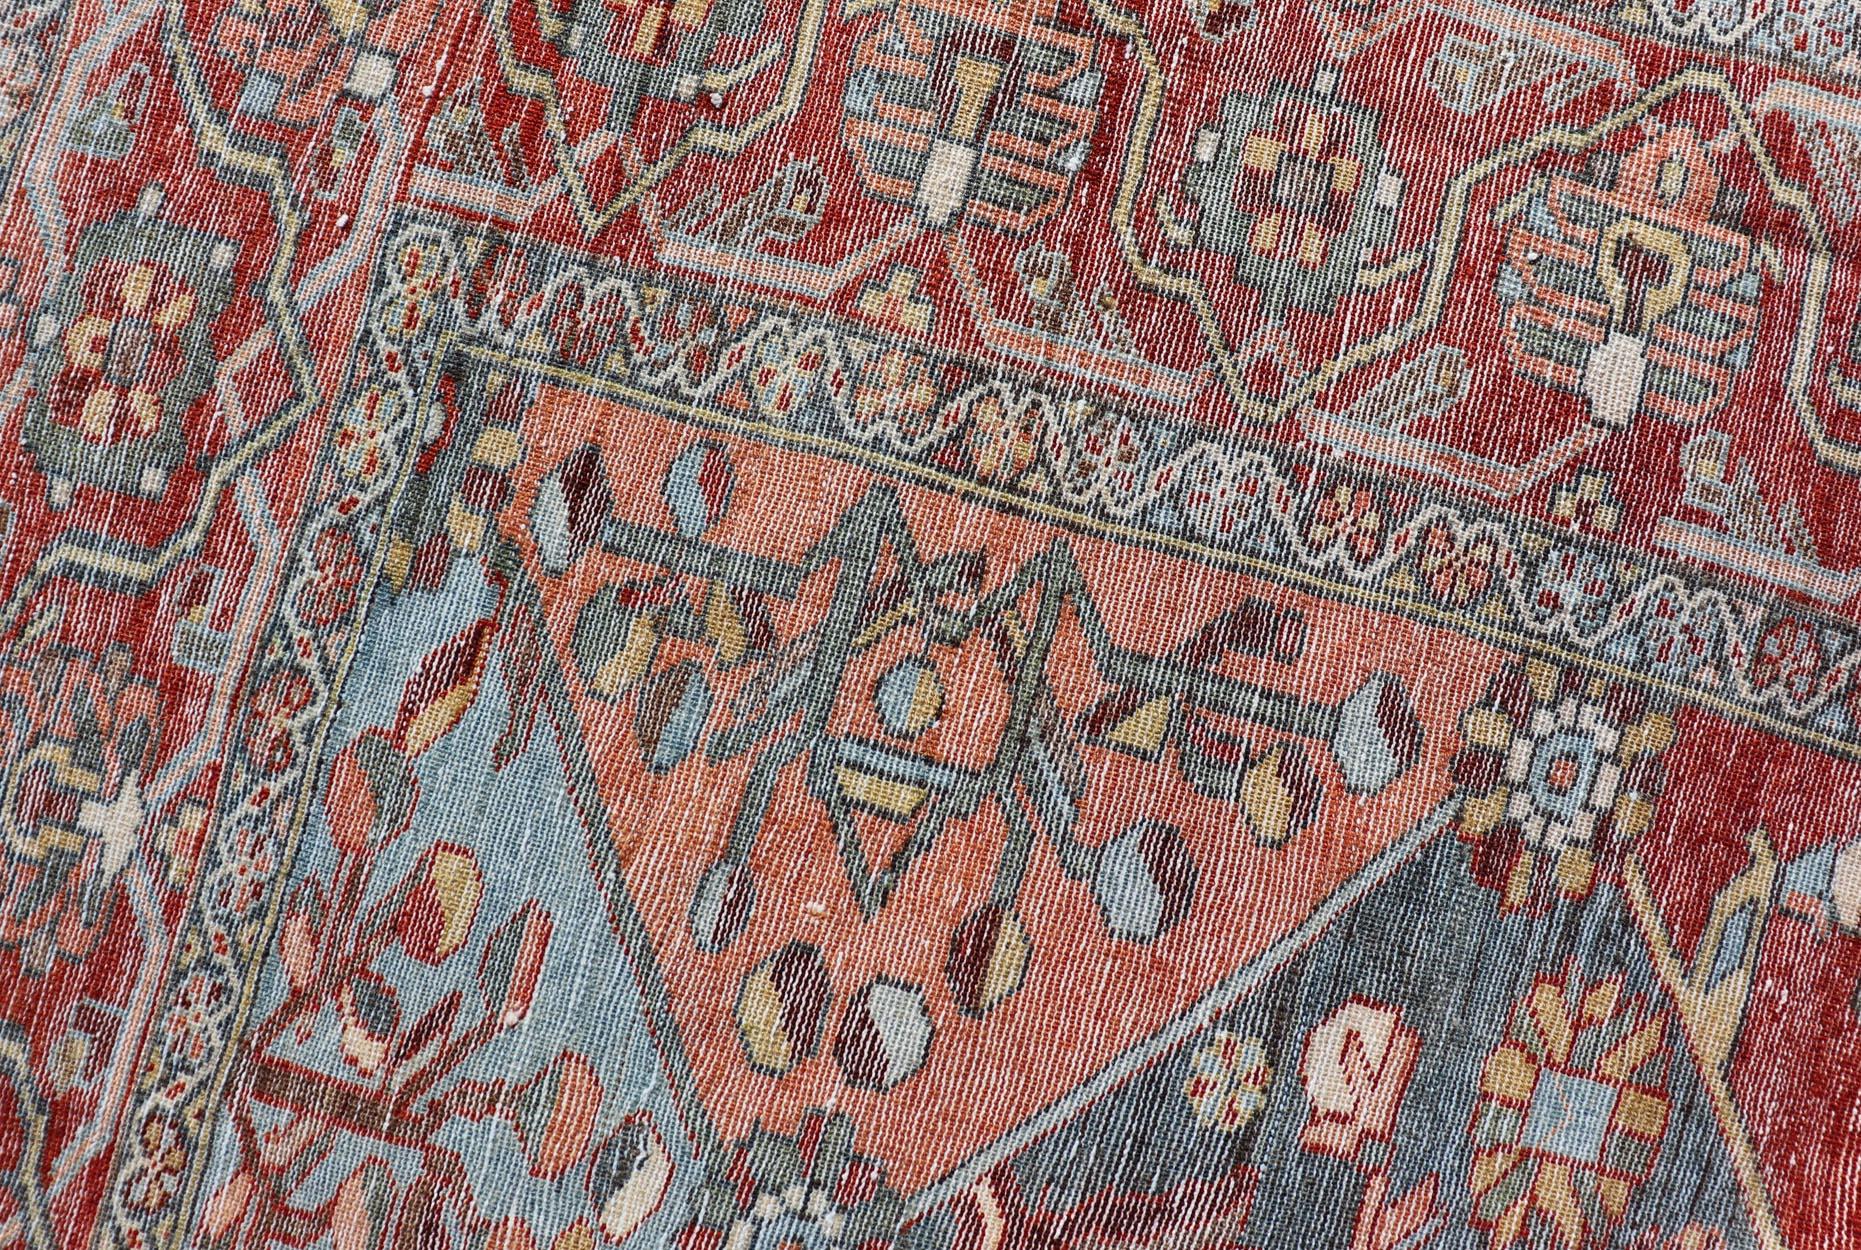 Antique Persian Bakhitari Colorful Rug in All-Over Diamond Garden Design  For Sale 5